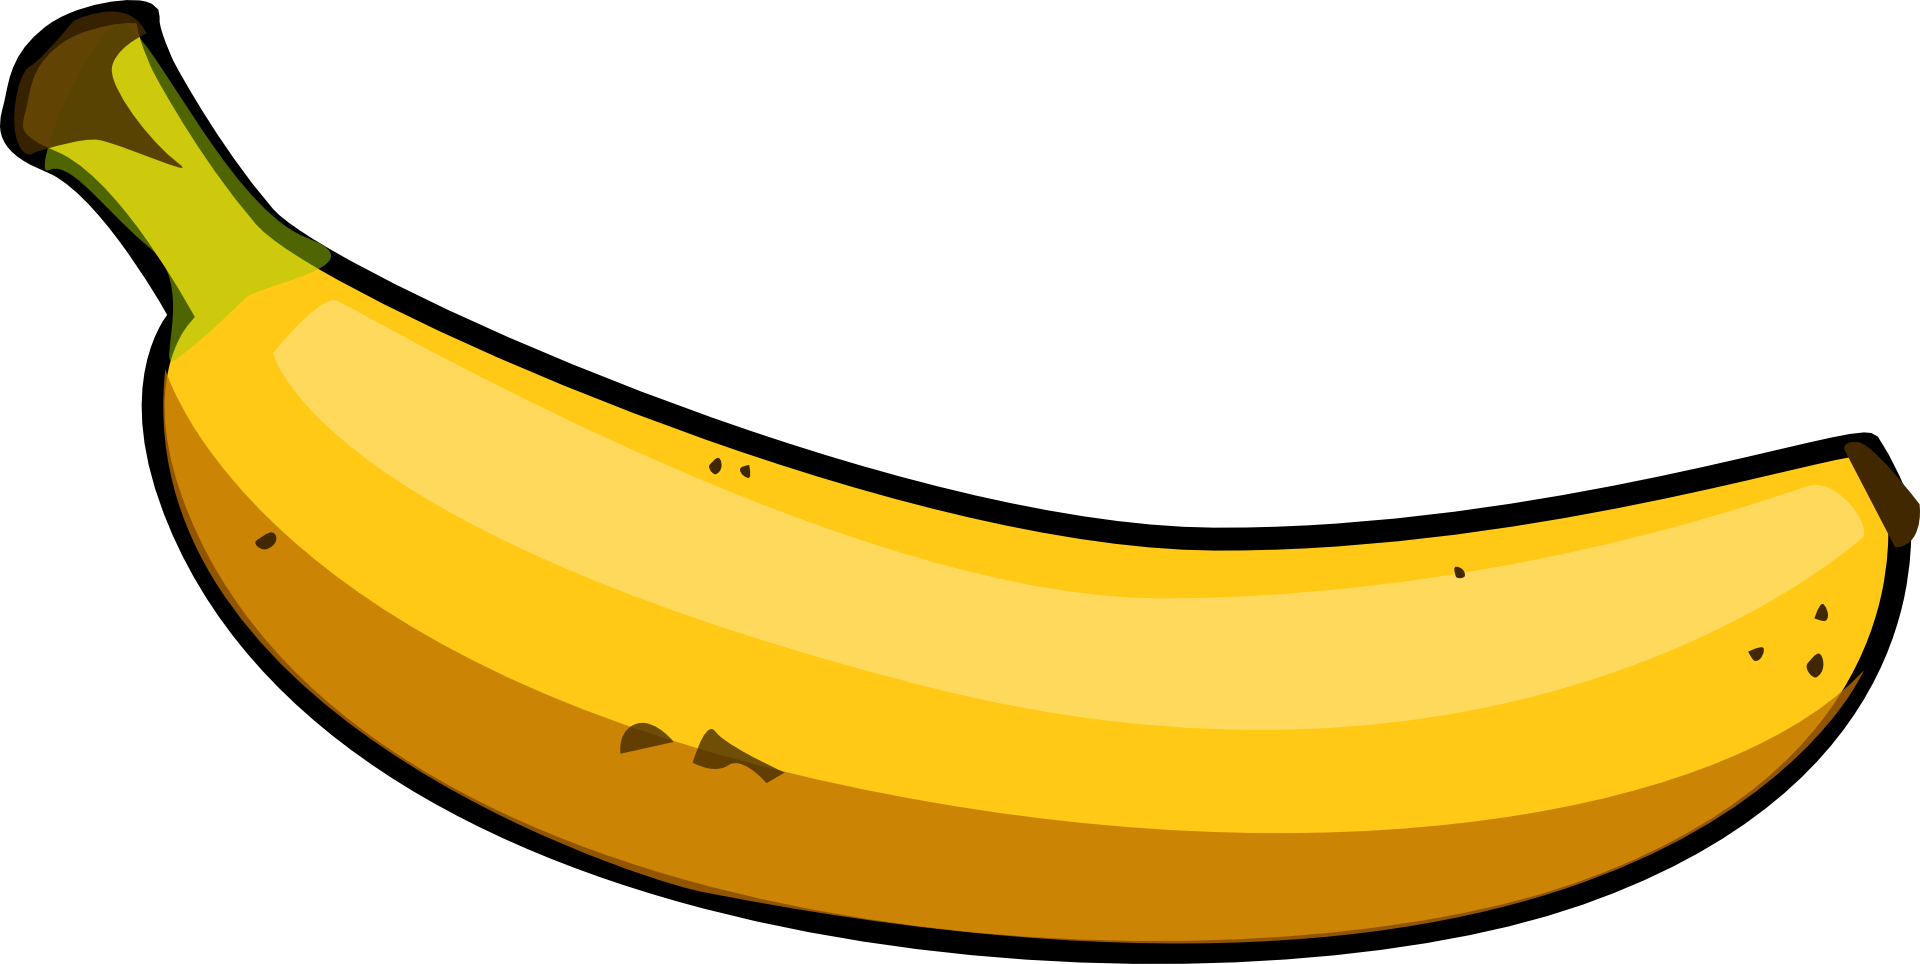 Banana clipart bananaclipart fruit clip art downloadclipart org